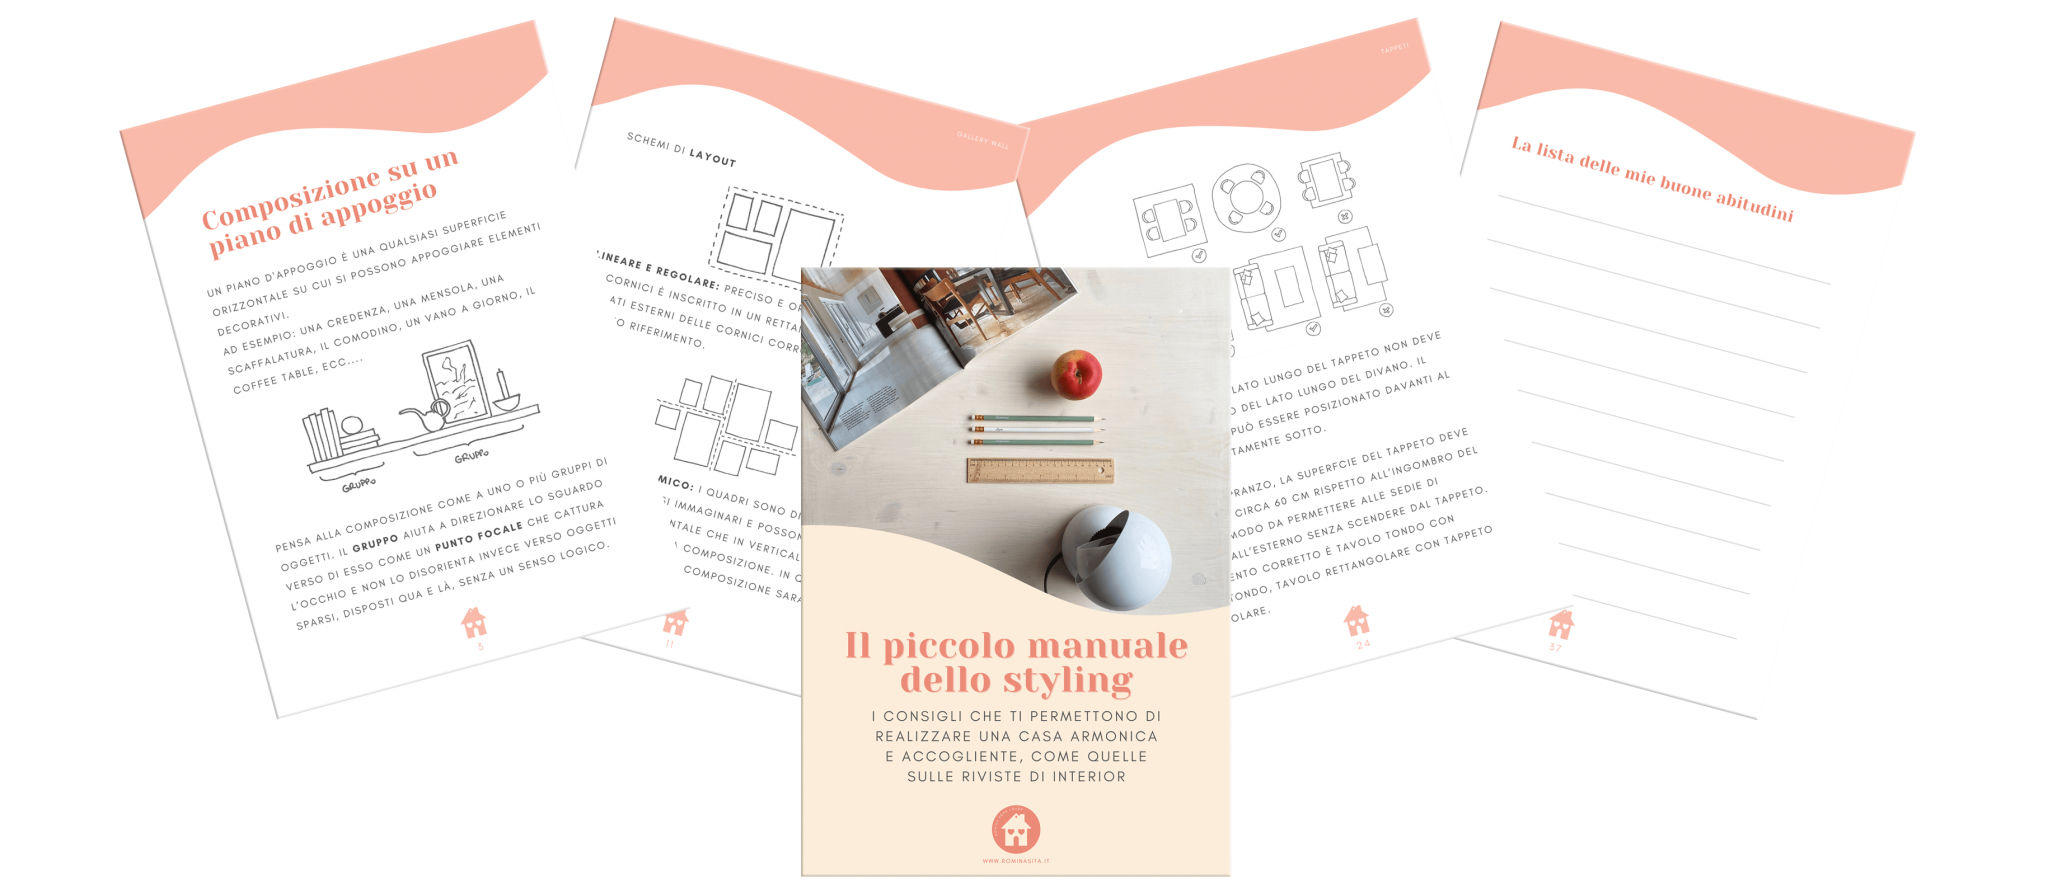 manuale dello styling by romina sita